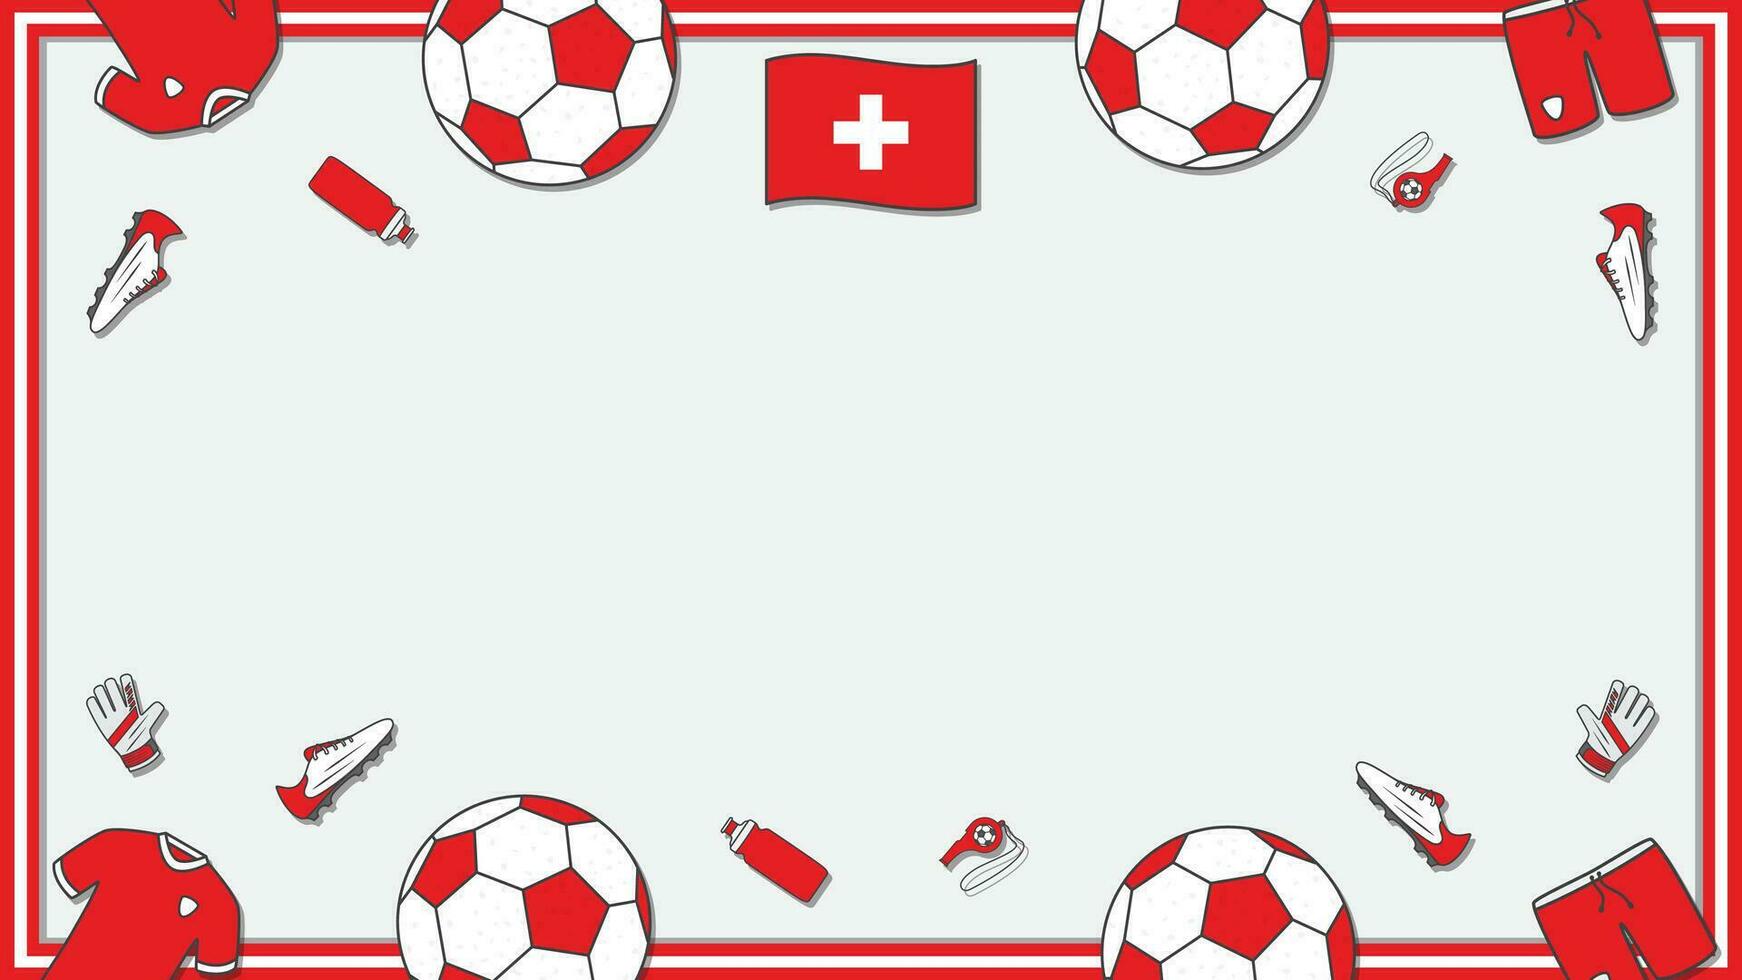 Football Background Design Template. Football Cartoon Vector Illustration. Championship In Switzerland